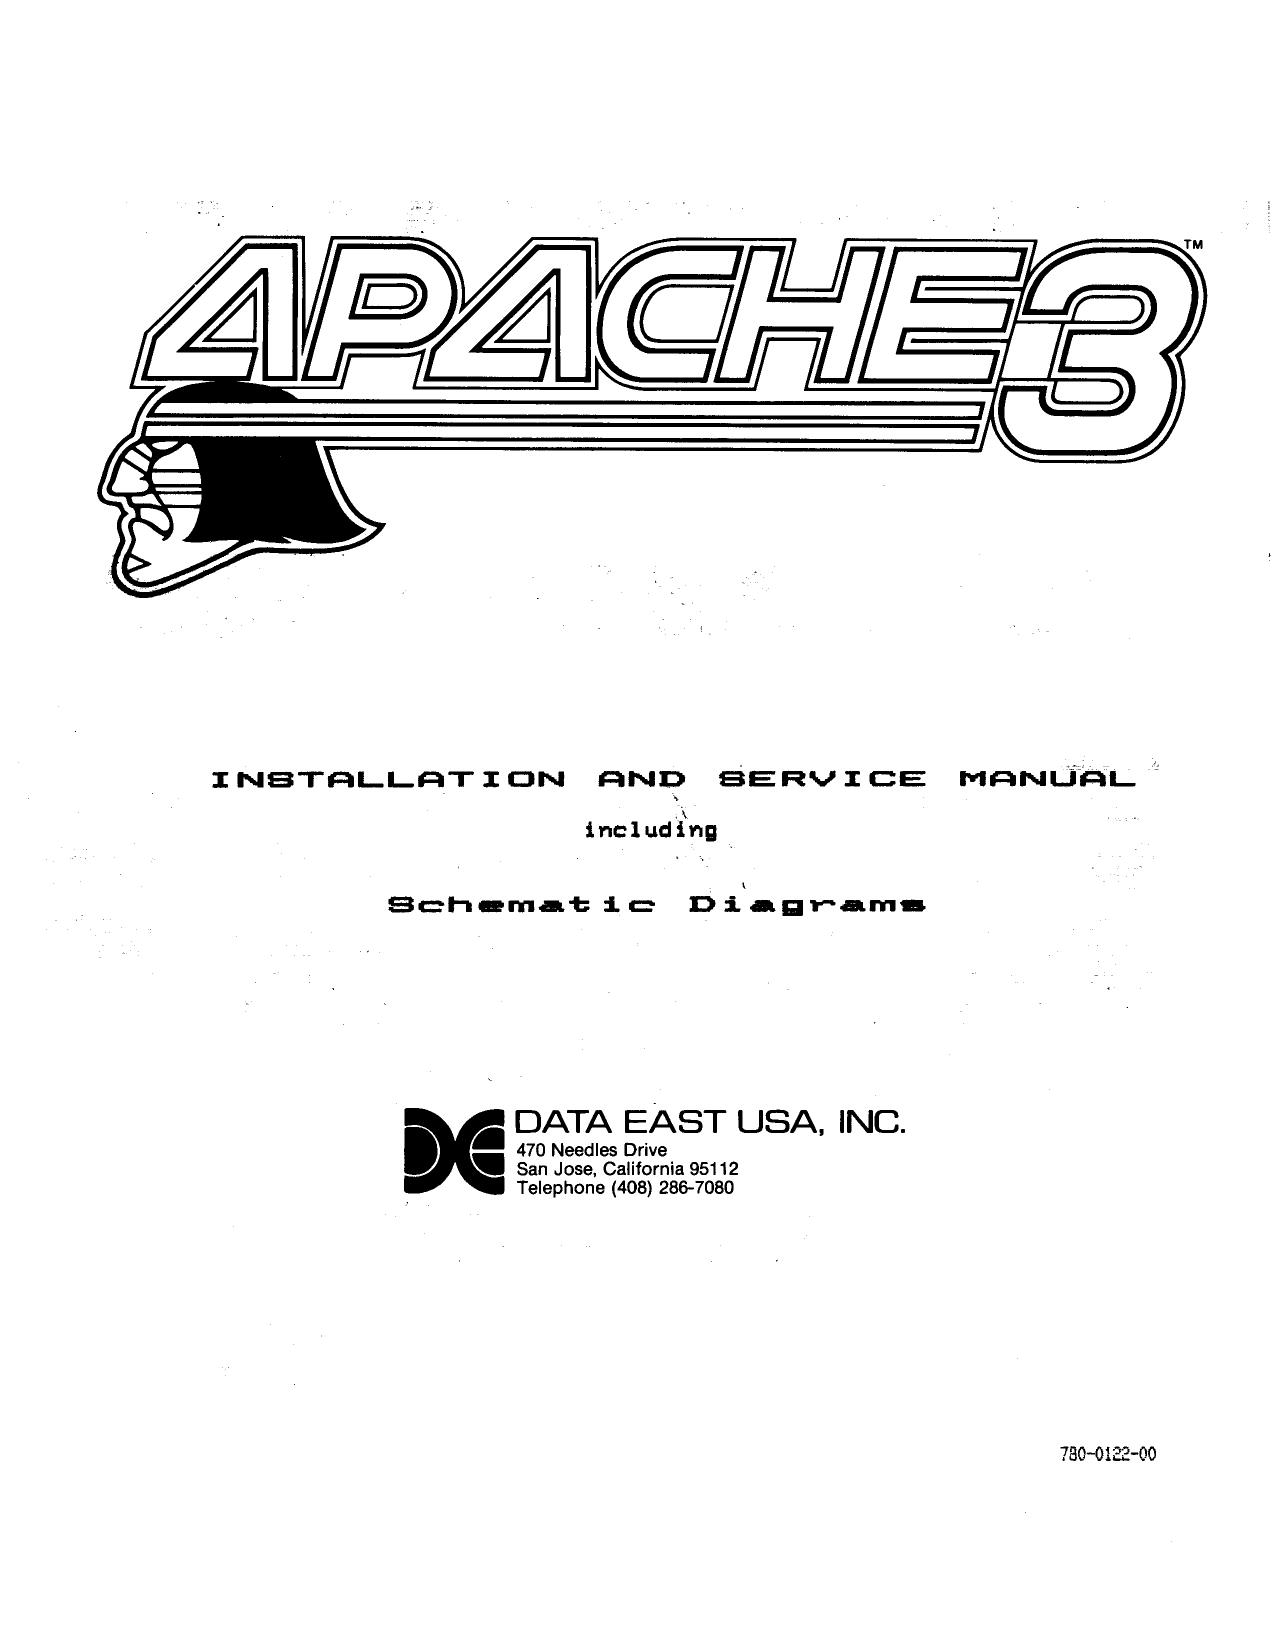 Apache3 Manual